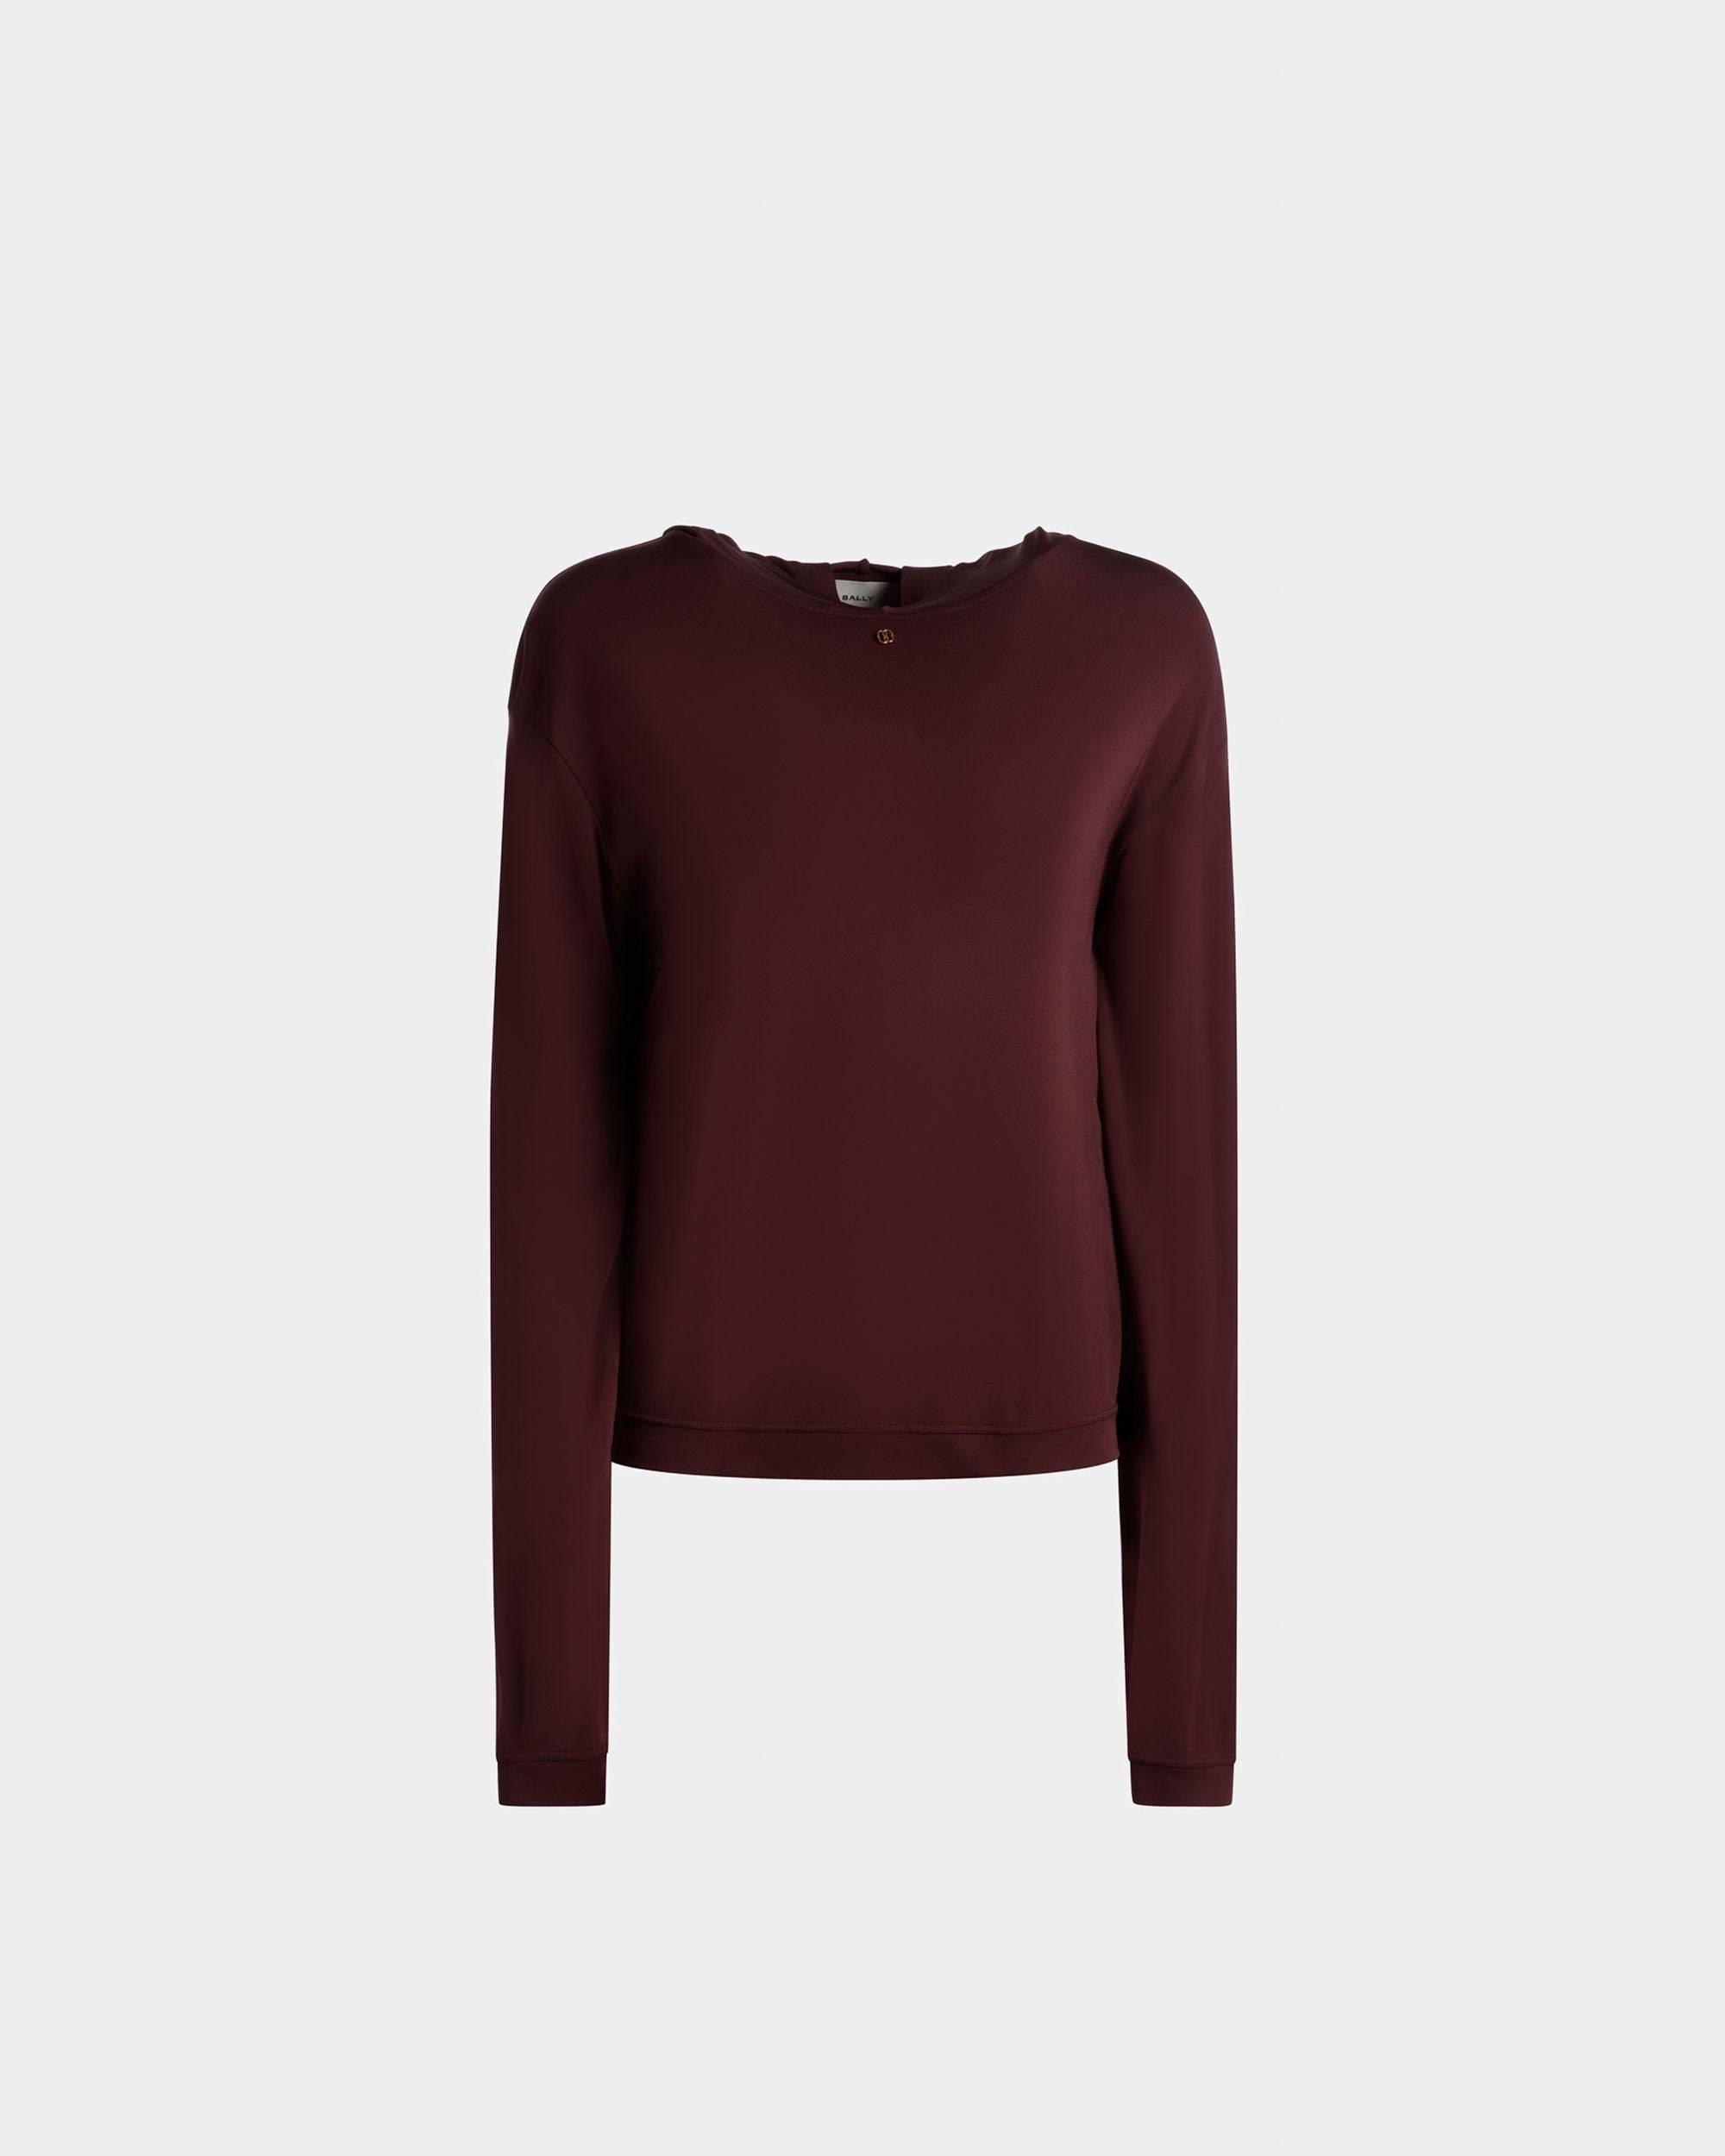 Women's Hooded Sweatshirt In Burgundy Fabric | Bally | Still Life Front